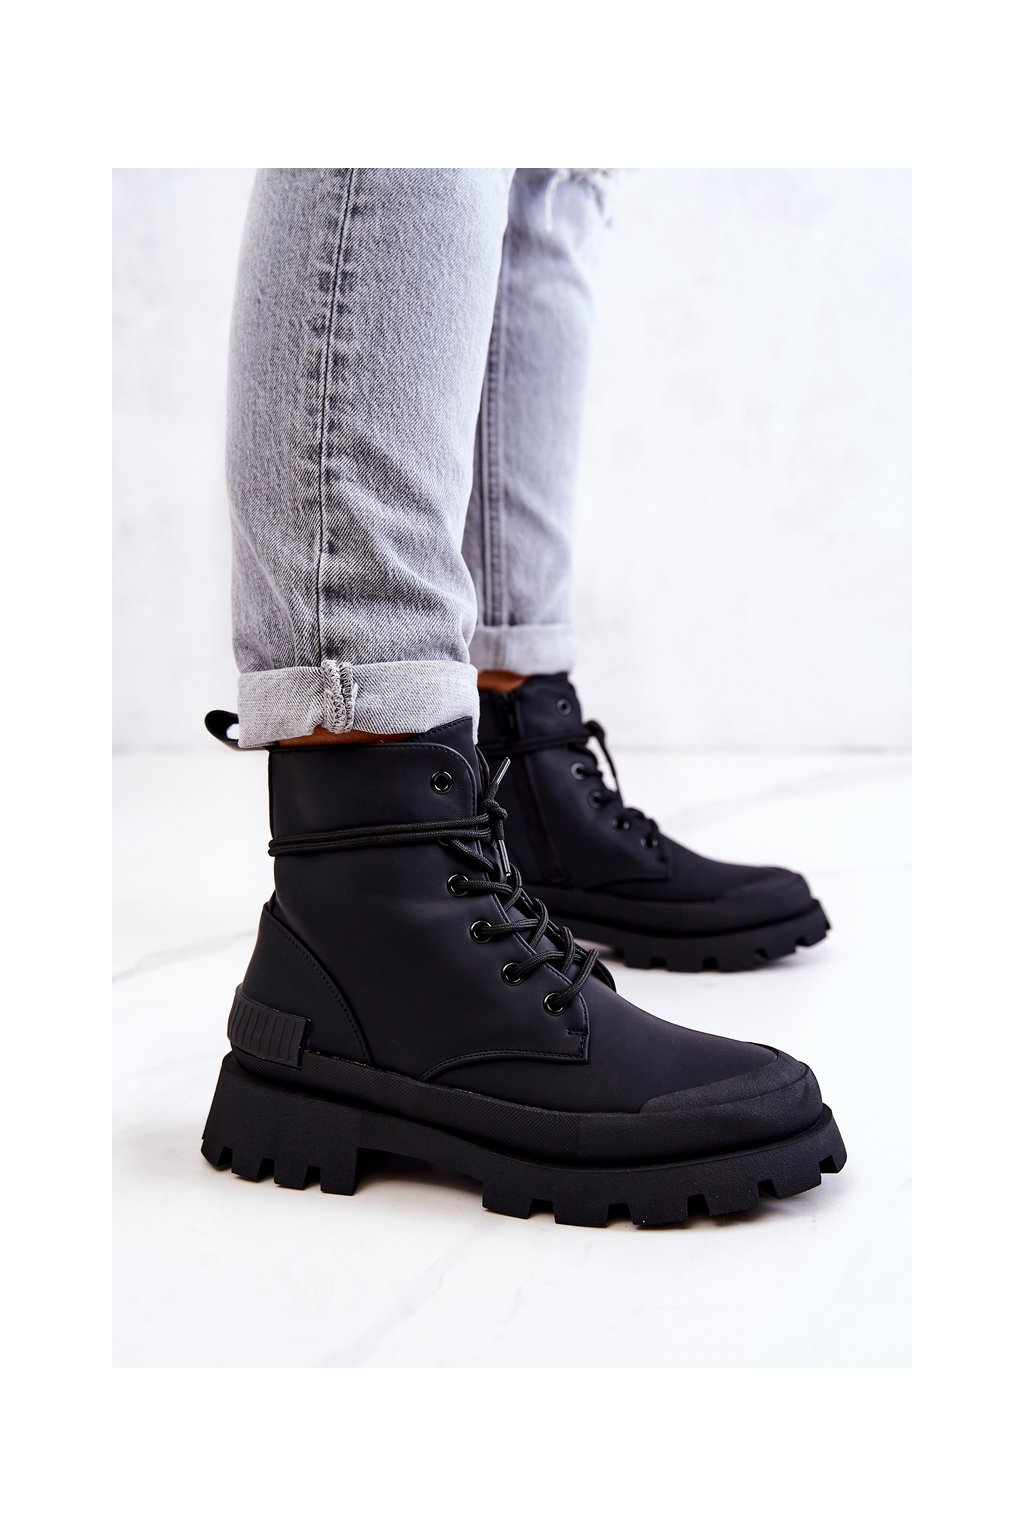 Členkové topánky na podpätku farba čierna kód obuvi UK70 BLK